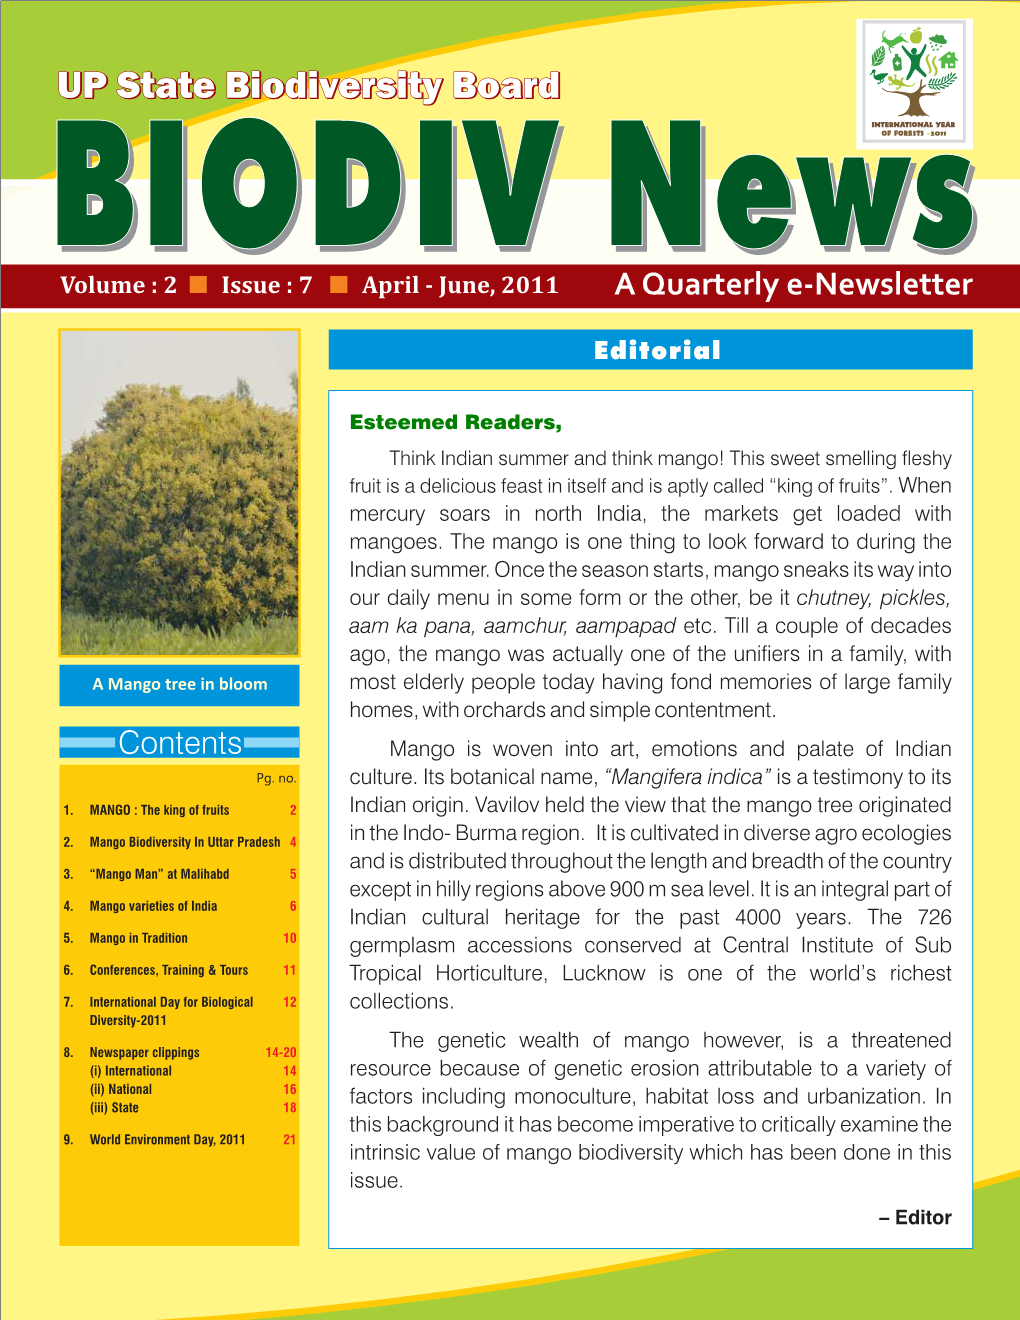 UP State Biodiversity Board BBIIOODDIIVV Nneewwss Volume : 2 N Issue : 7 N April - June, 2011 a Quarterly E-Newsletter